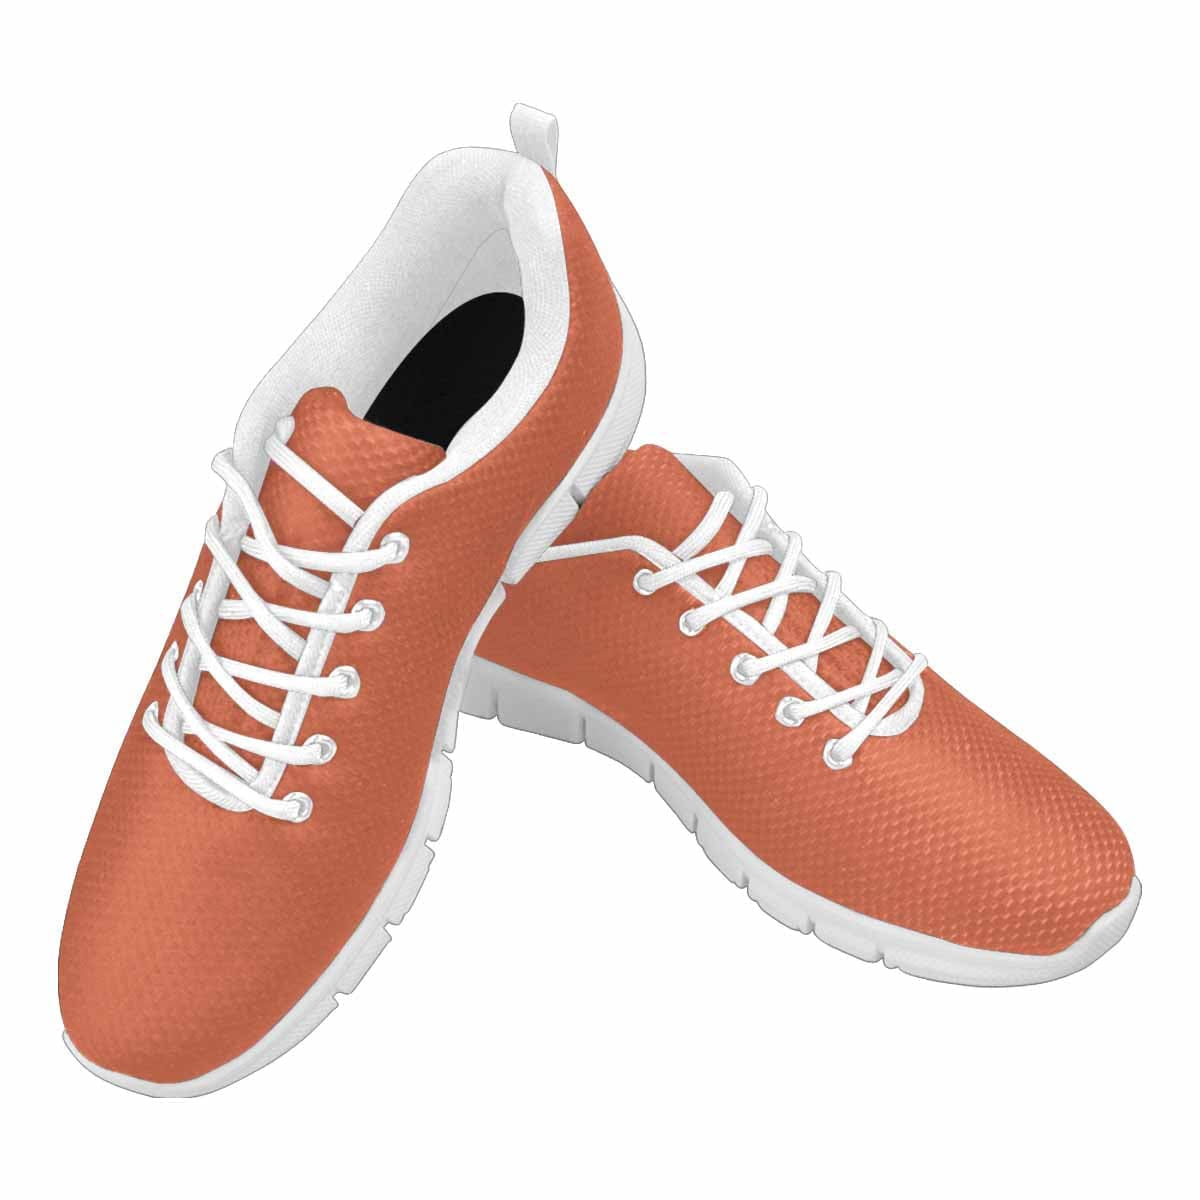 Sneakers For Men Burnt Sienna Red - Running Shoes - Mens | Sneakers | Running